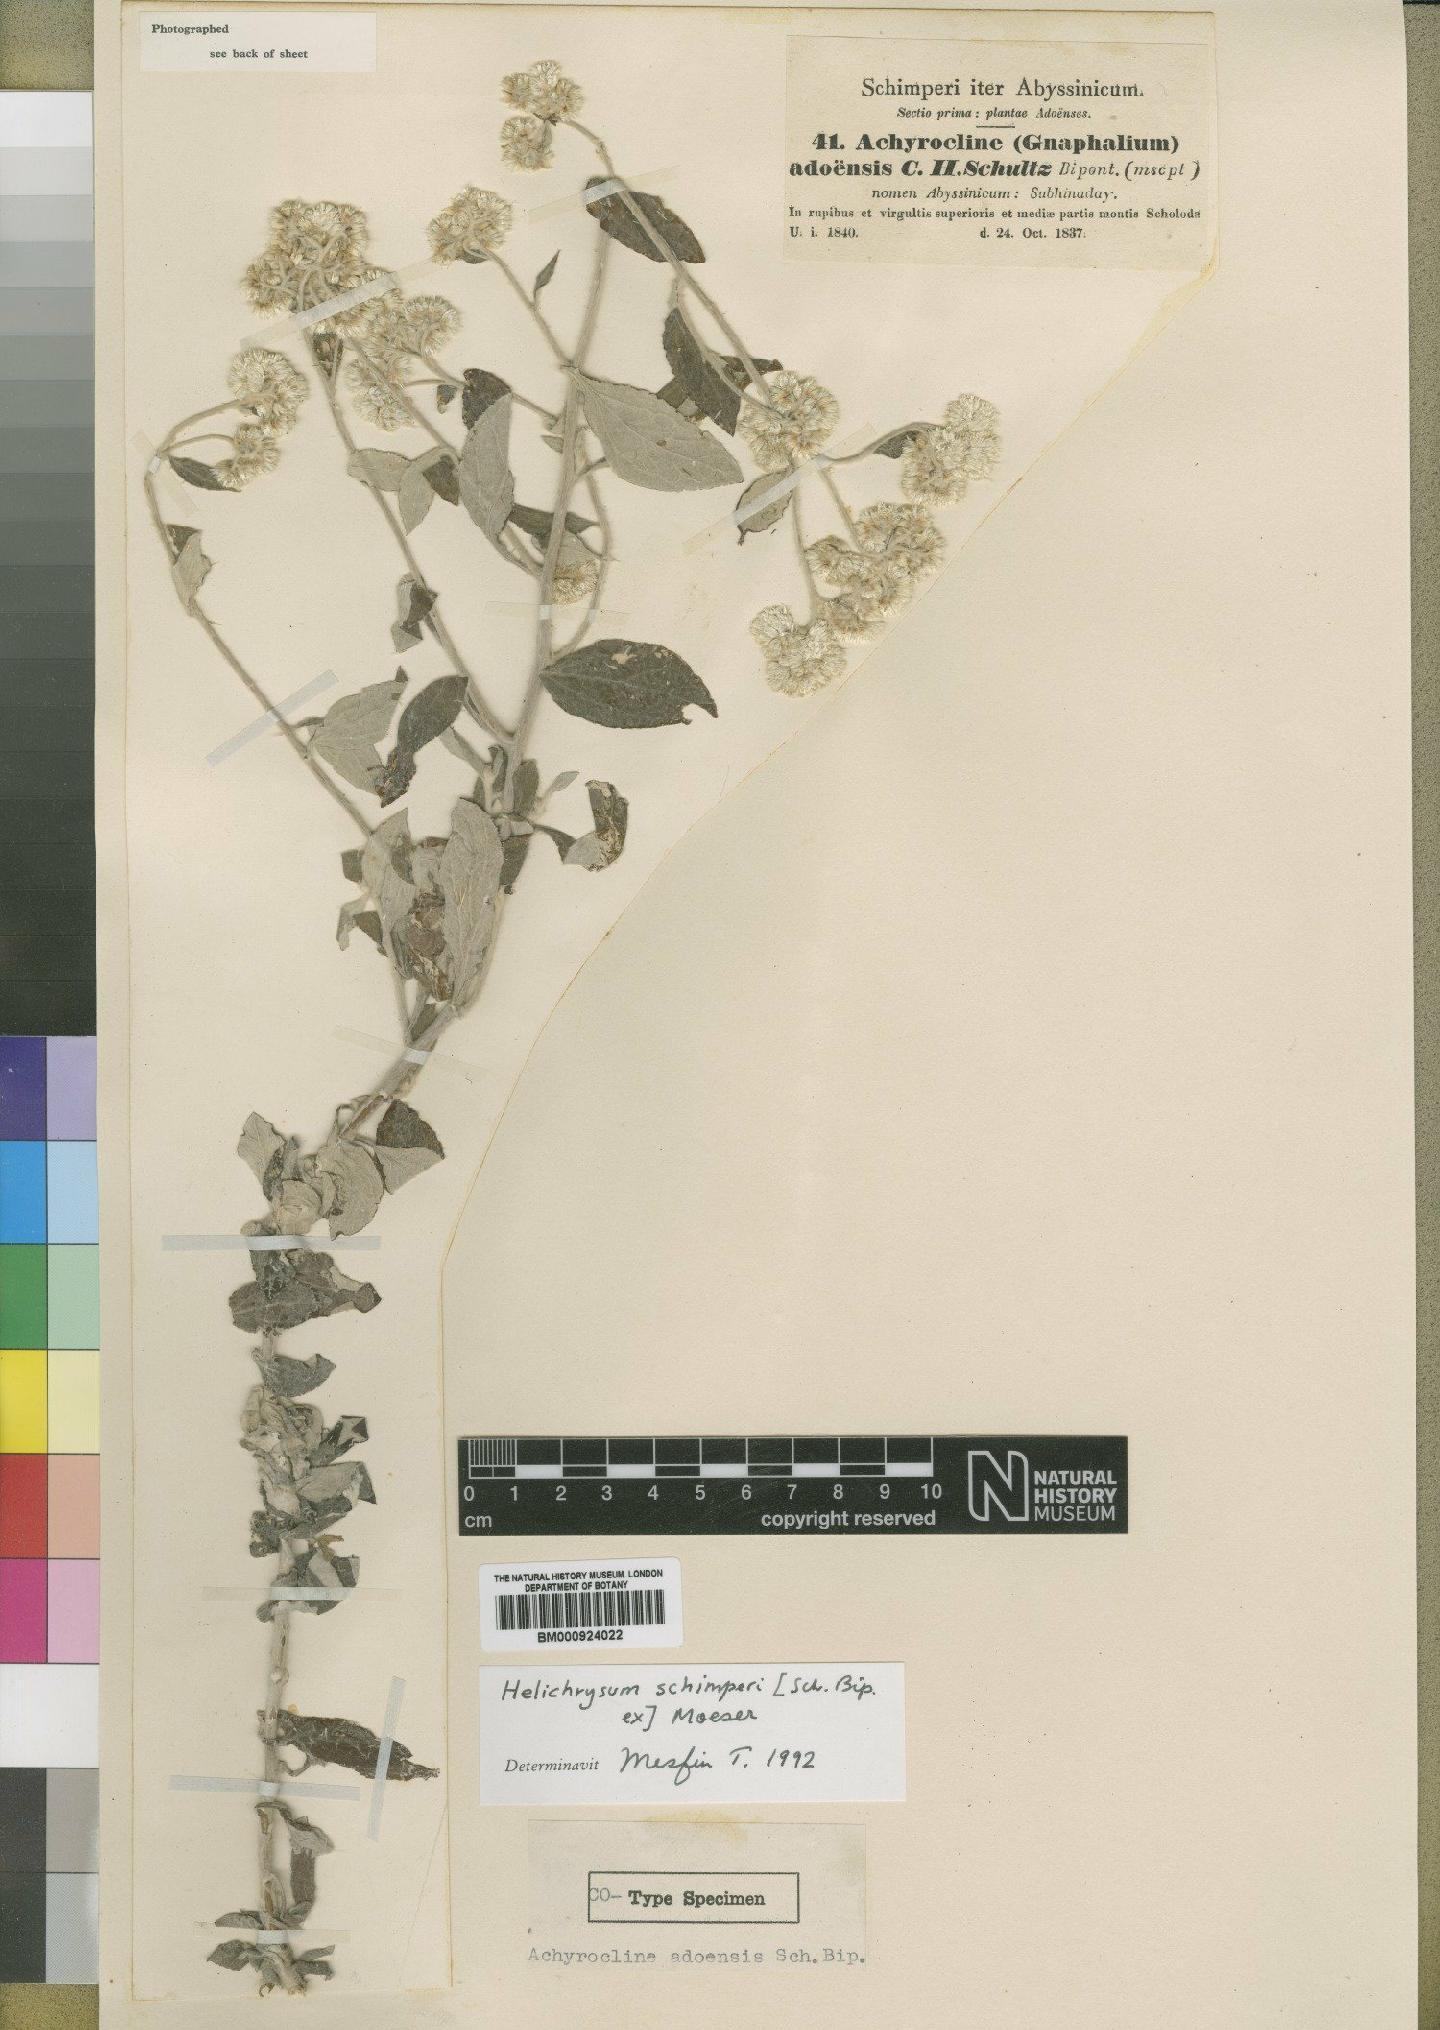 To NHMUK collection (Helichrysum schimperi Moeser; TYPE; NHMUK:ecatalogue:4529070)